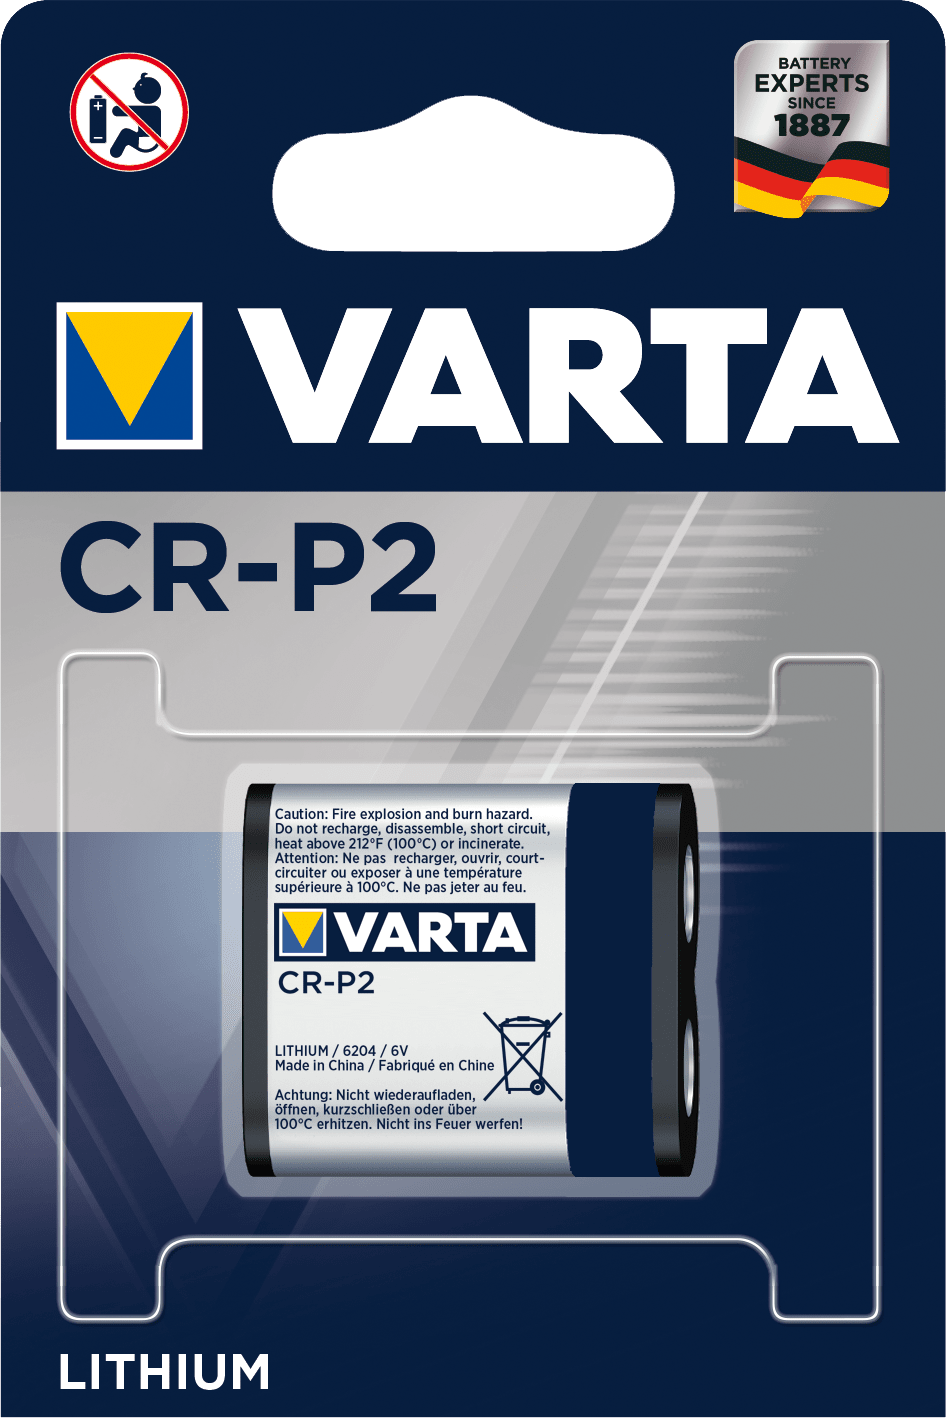 Varta - Pile lithium photo CRP2. Blister x1